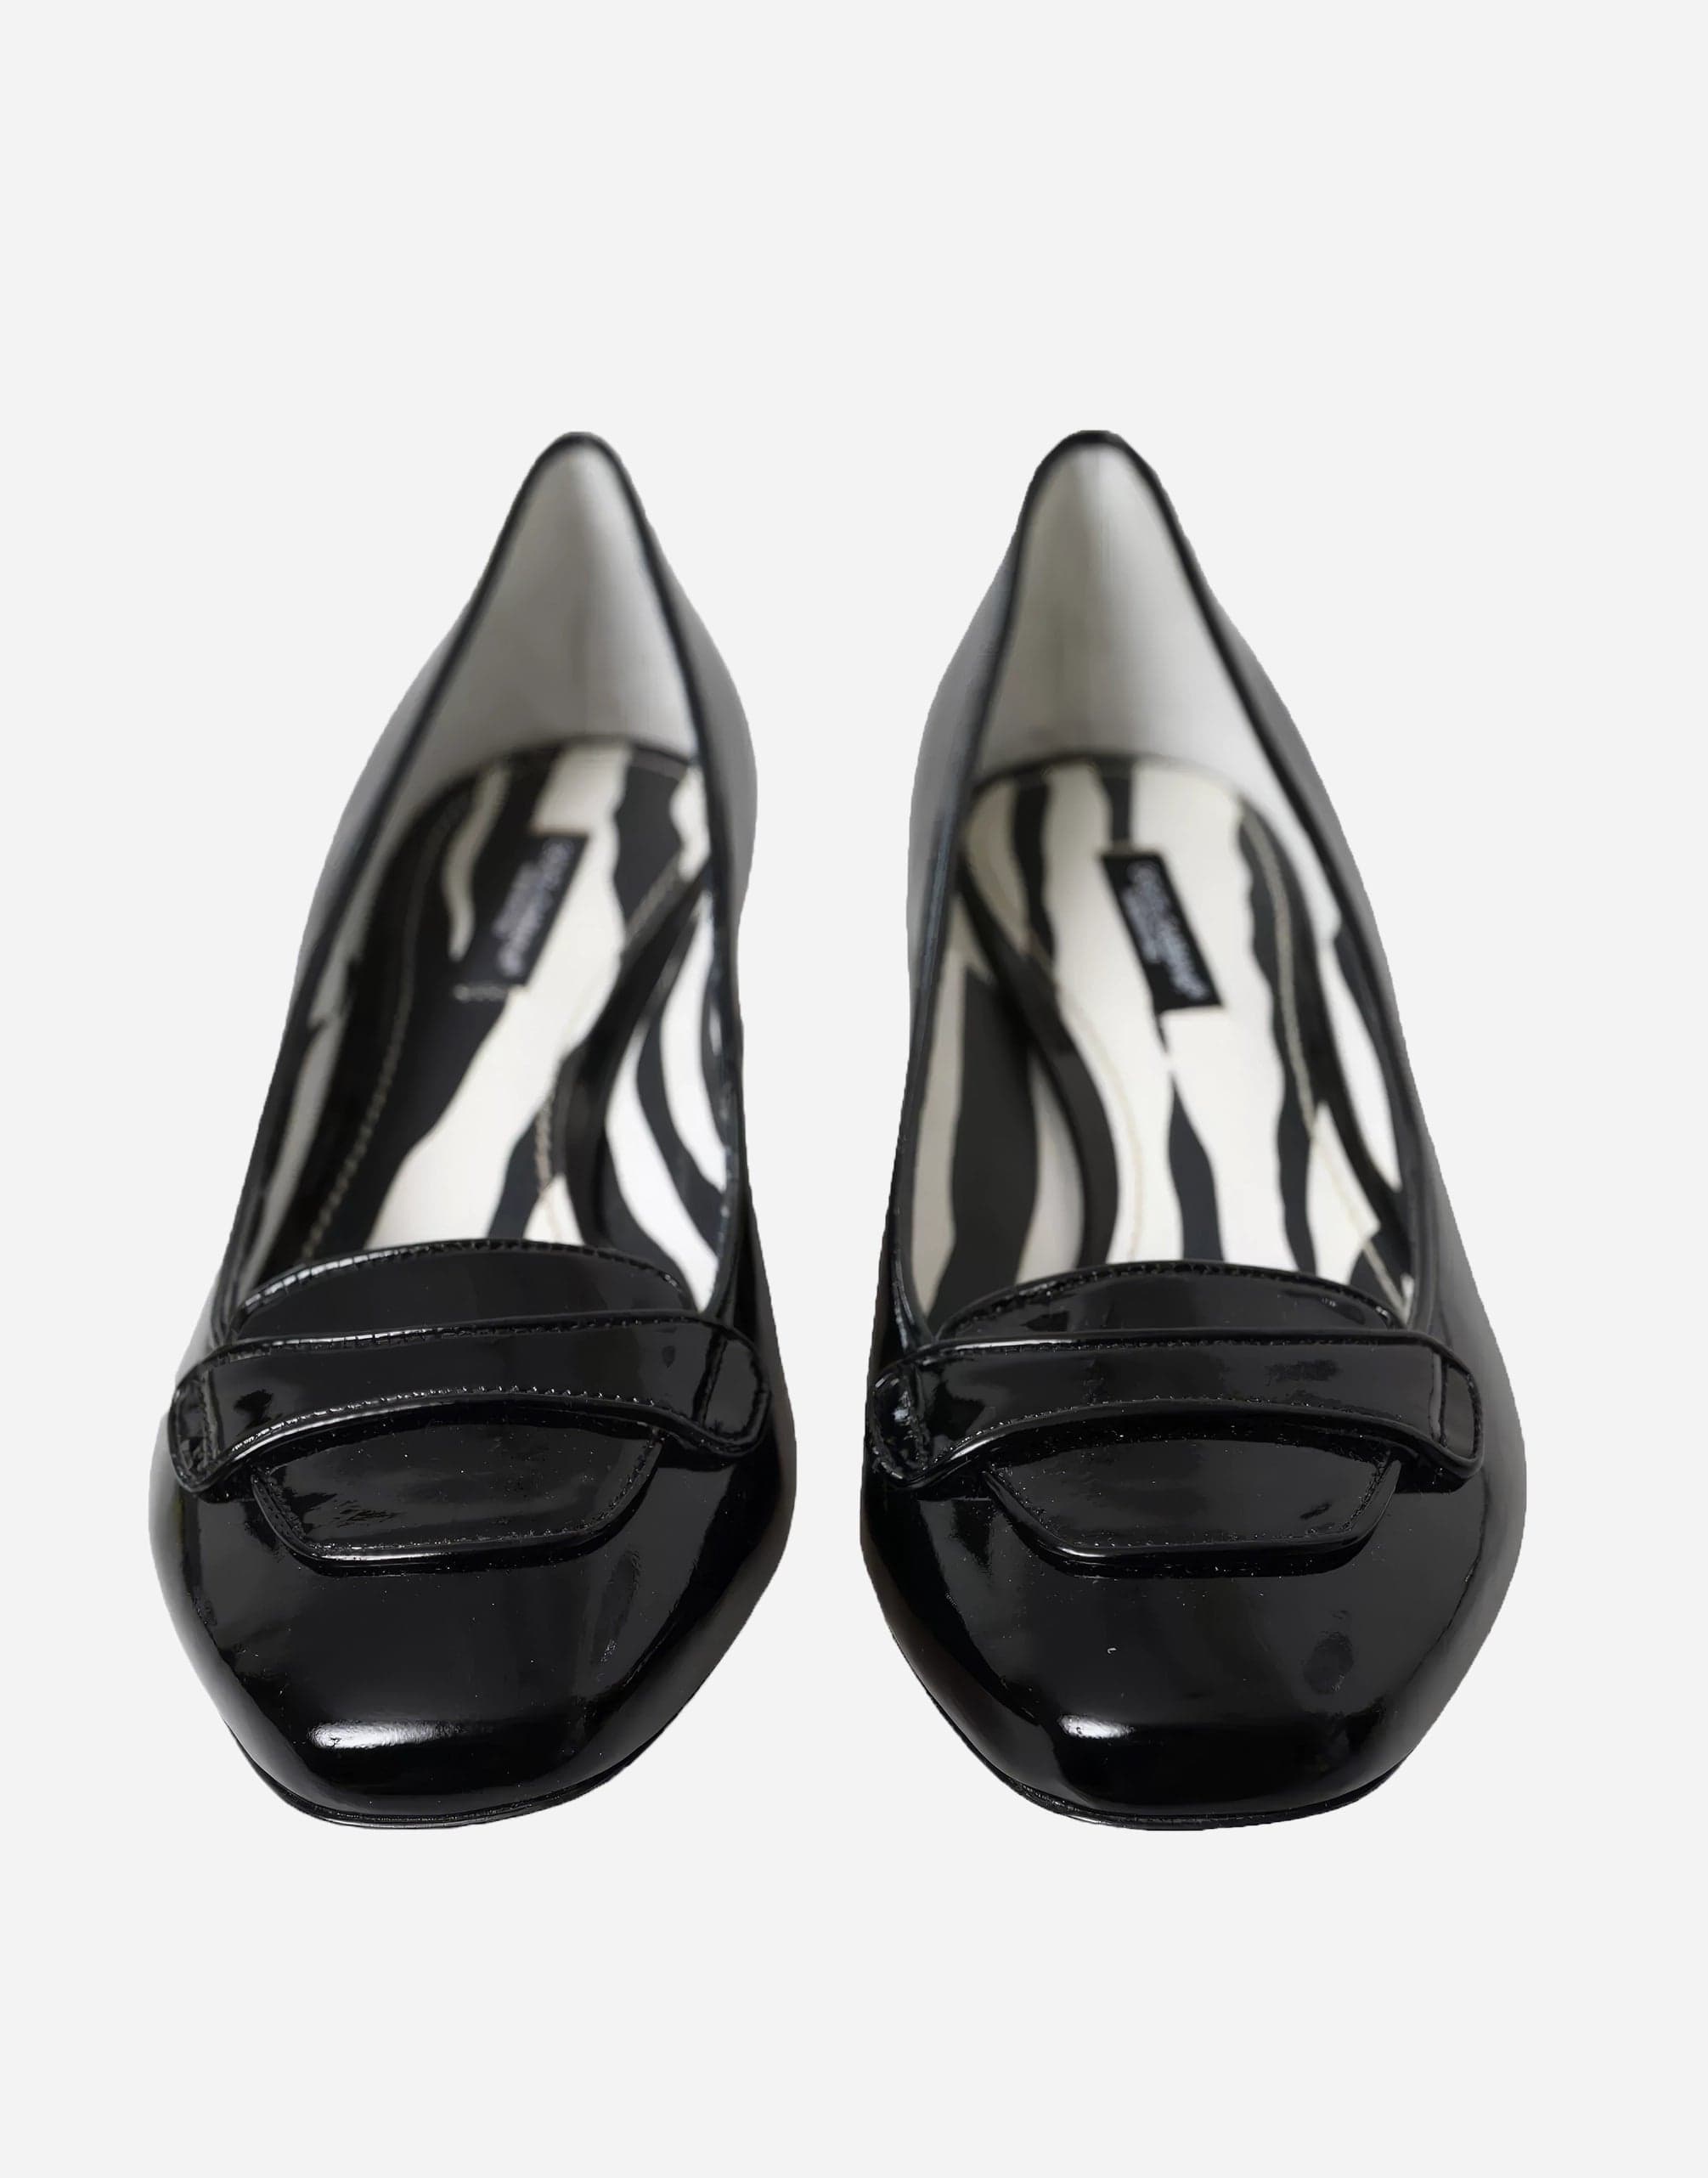 Dolce & Gabbana Patent Leather Block Heel Pumps